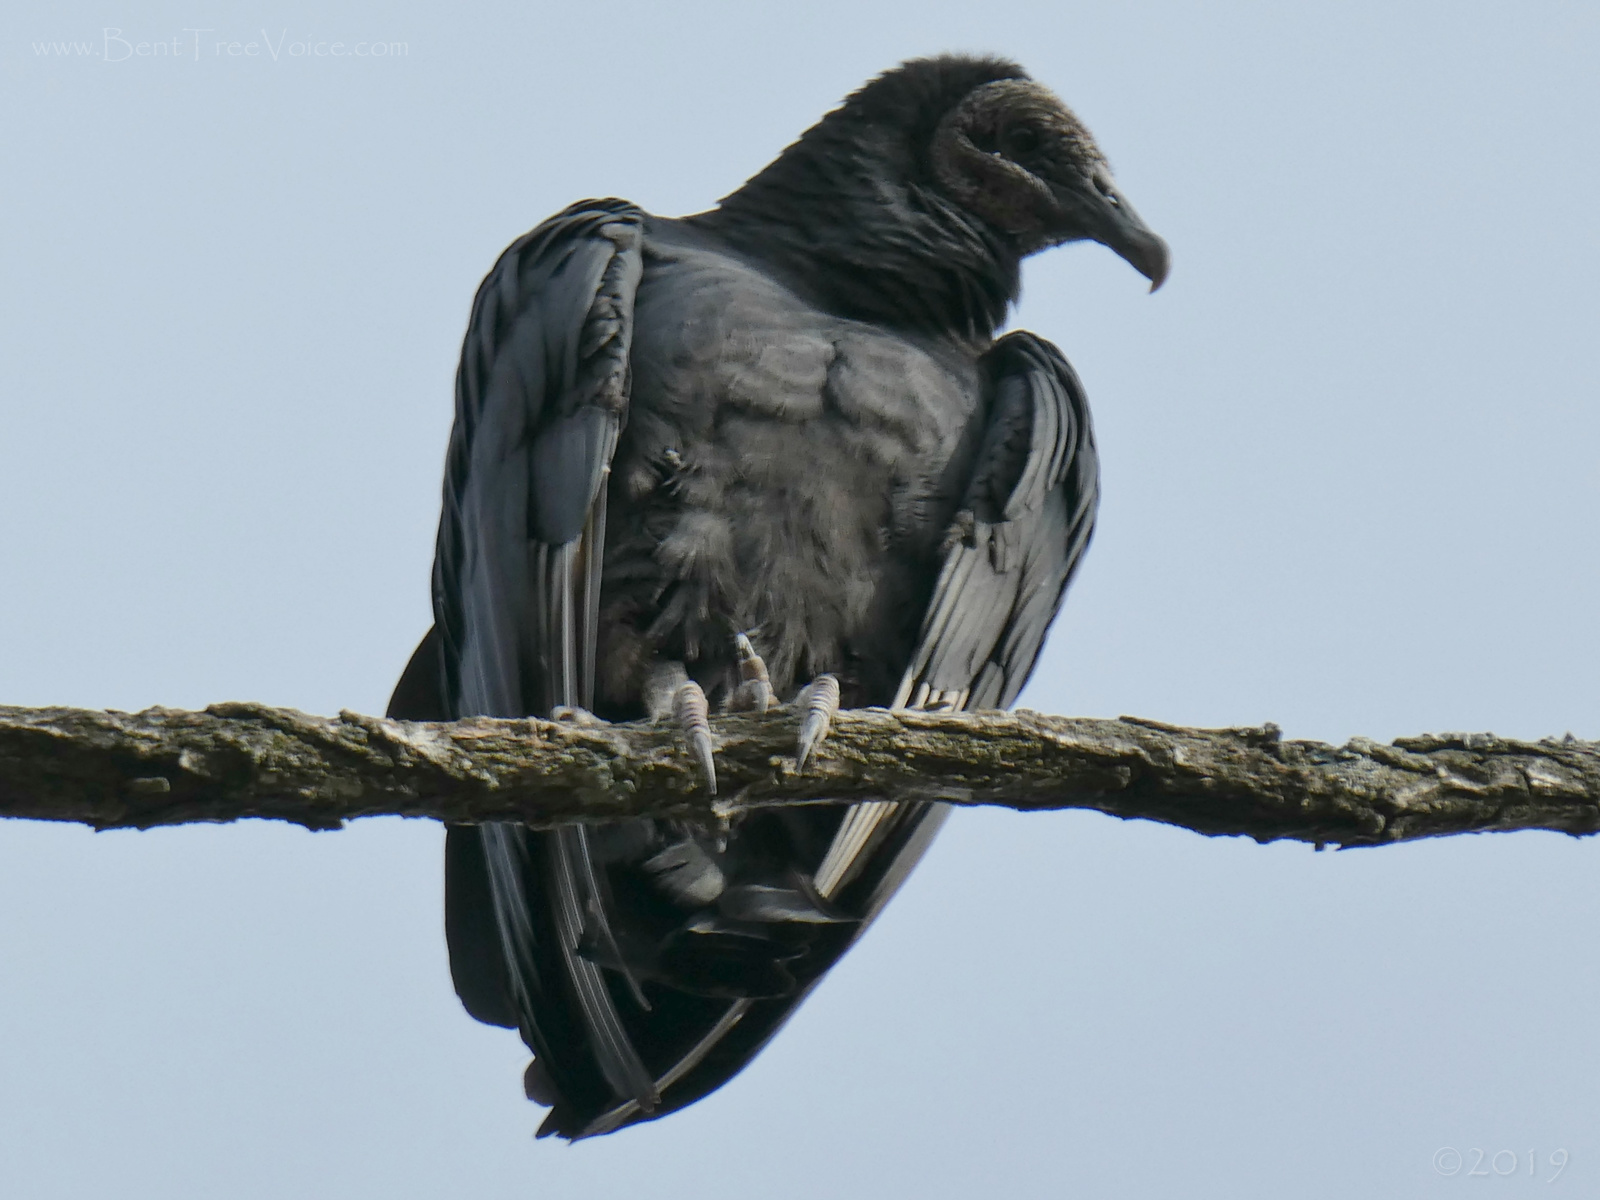 December 26, 2019 - Black Vulture in Bent Tree